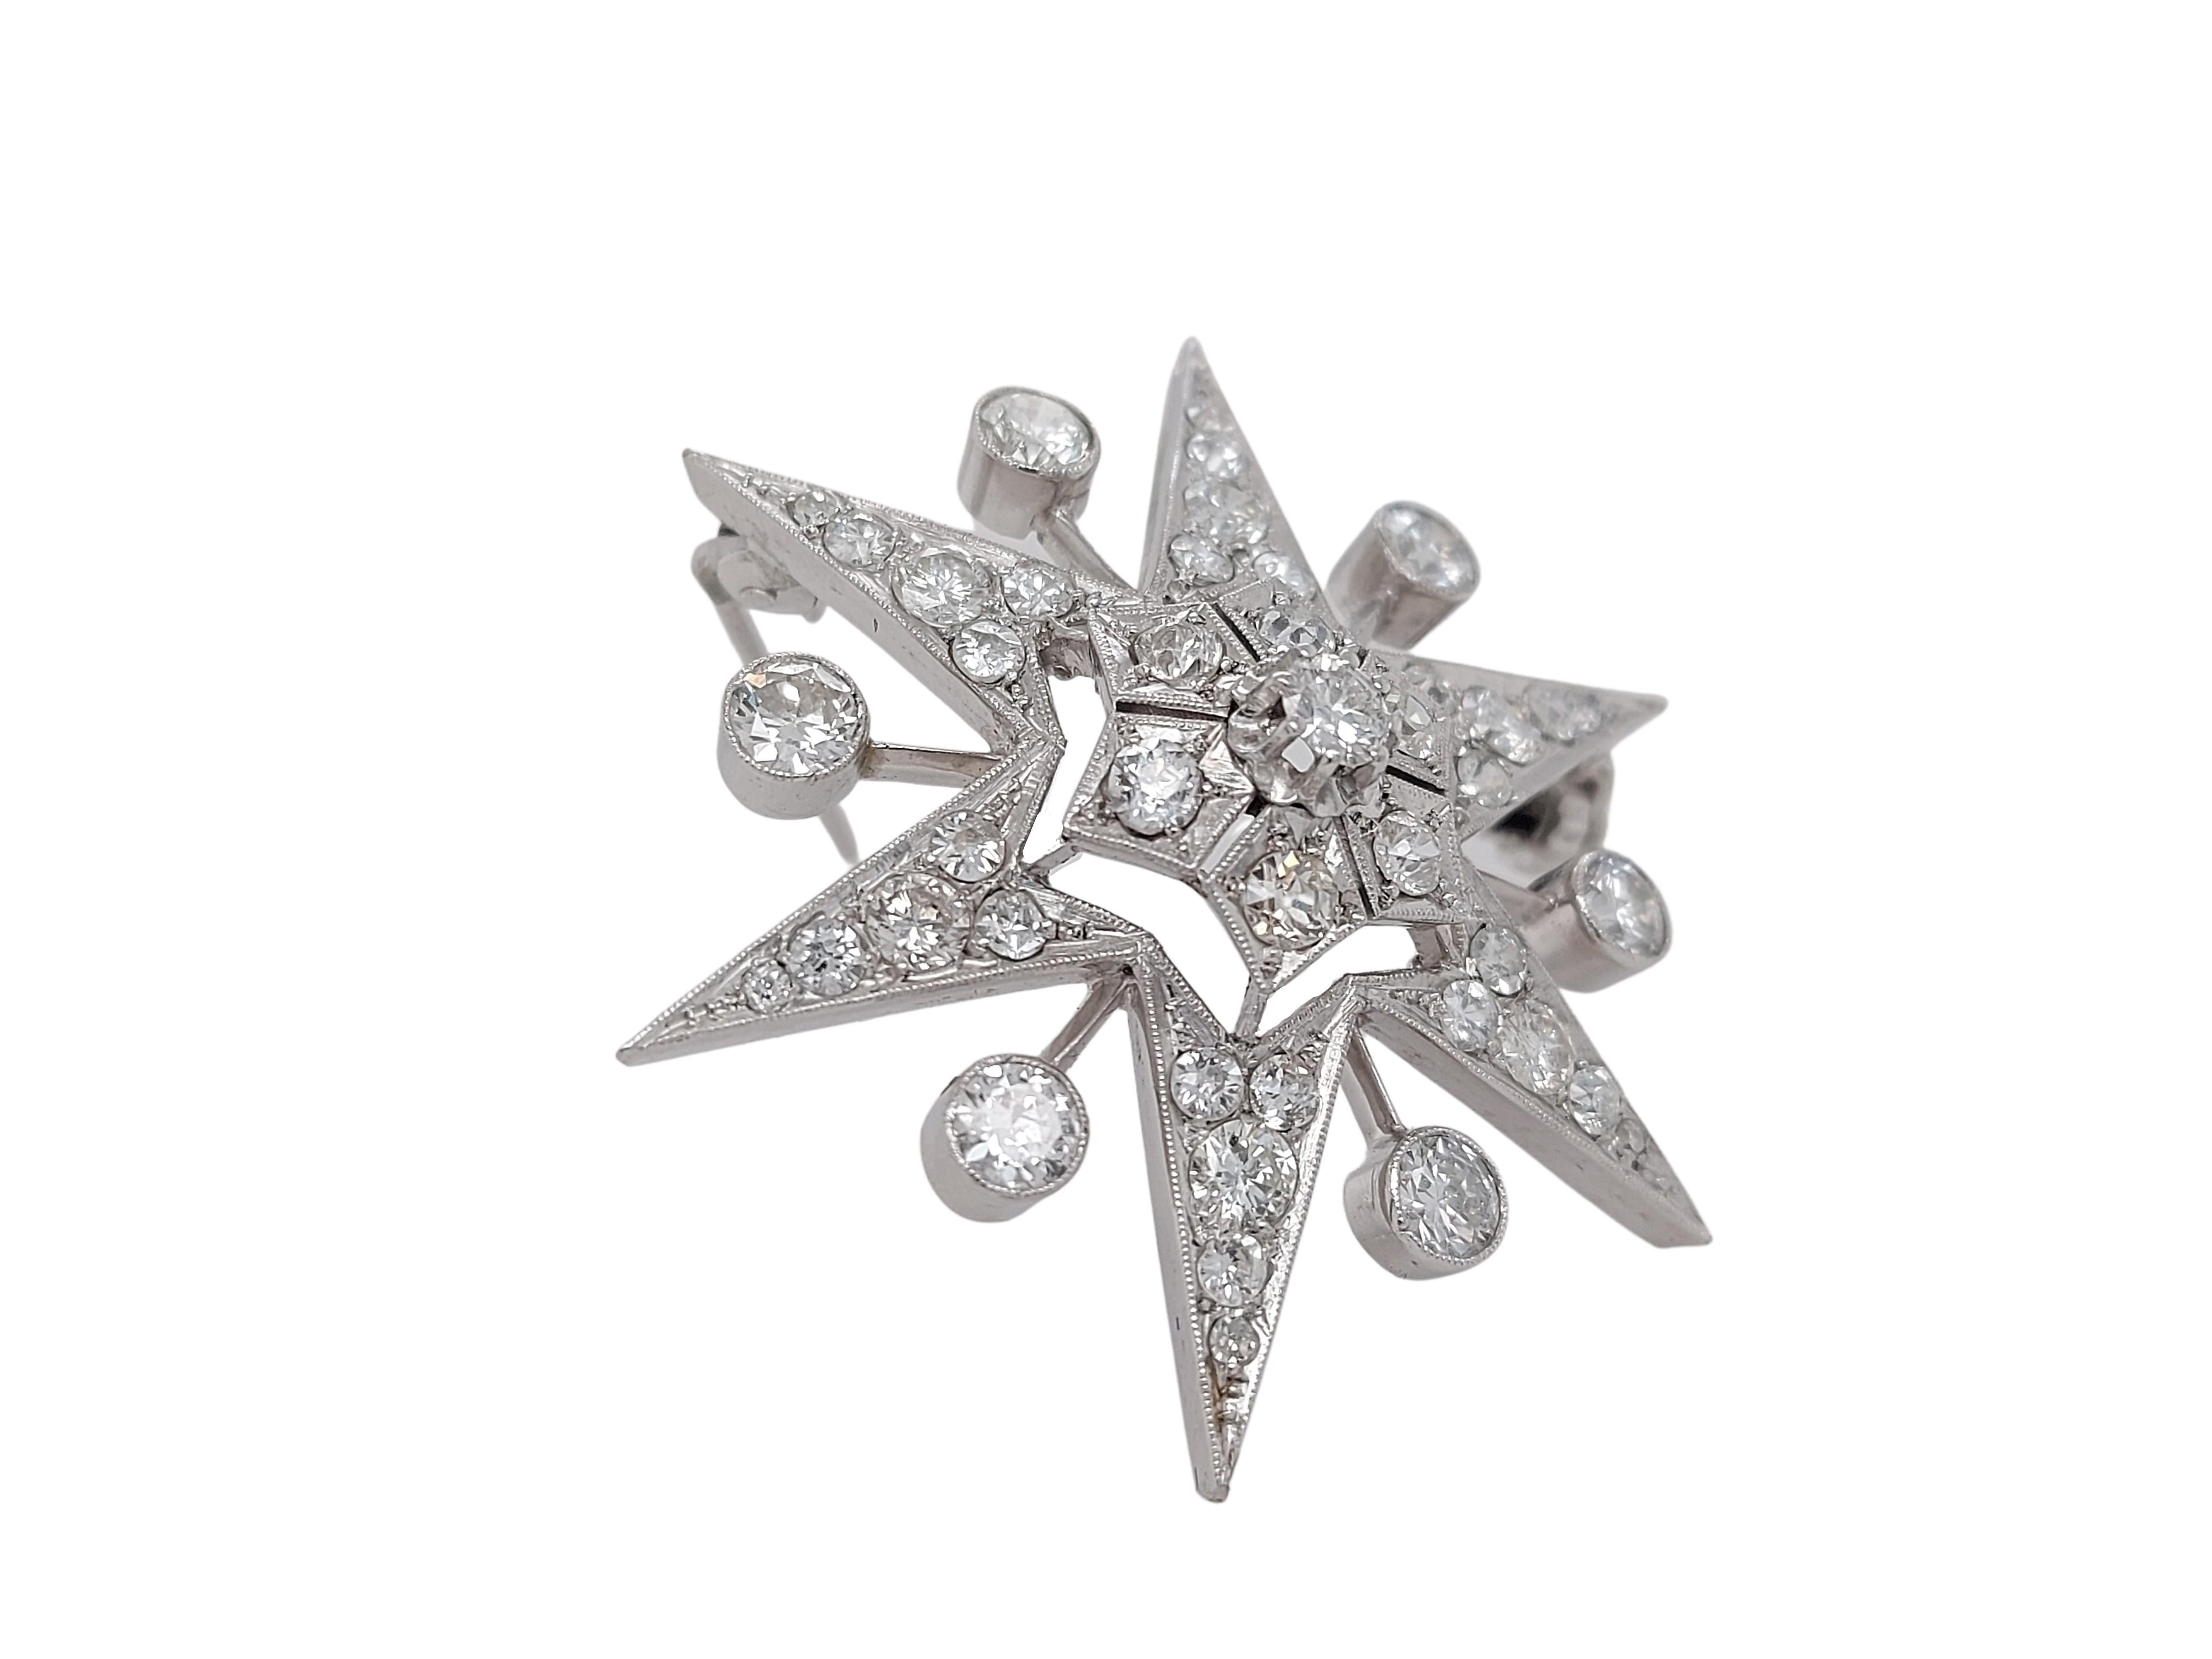 Artisan 18kt White Gold Star Shape Brooch/Pendant with 3.8ct Diamonds